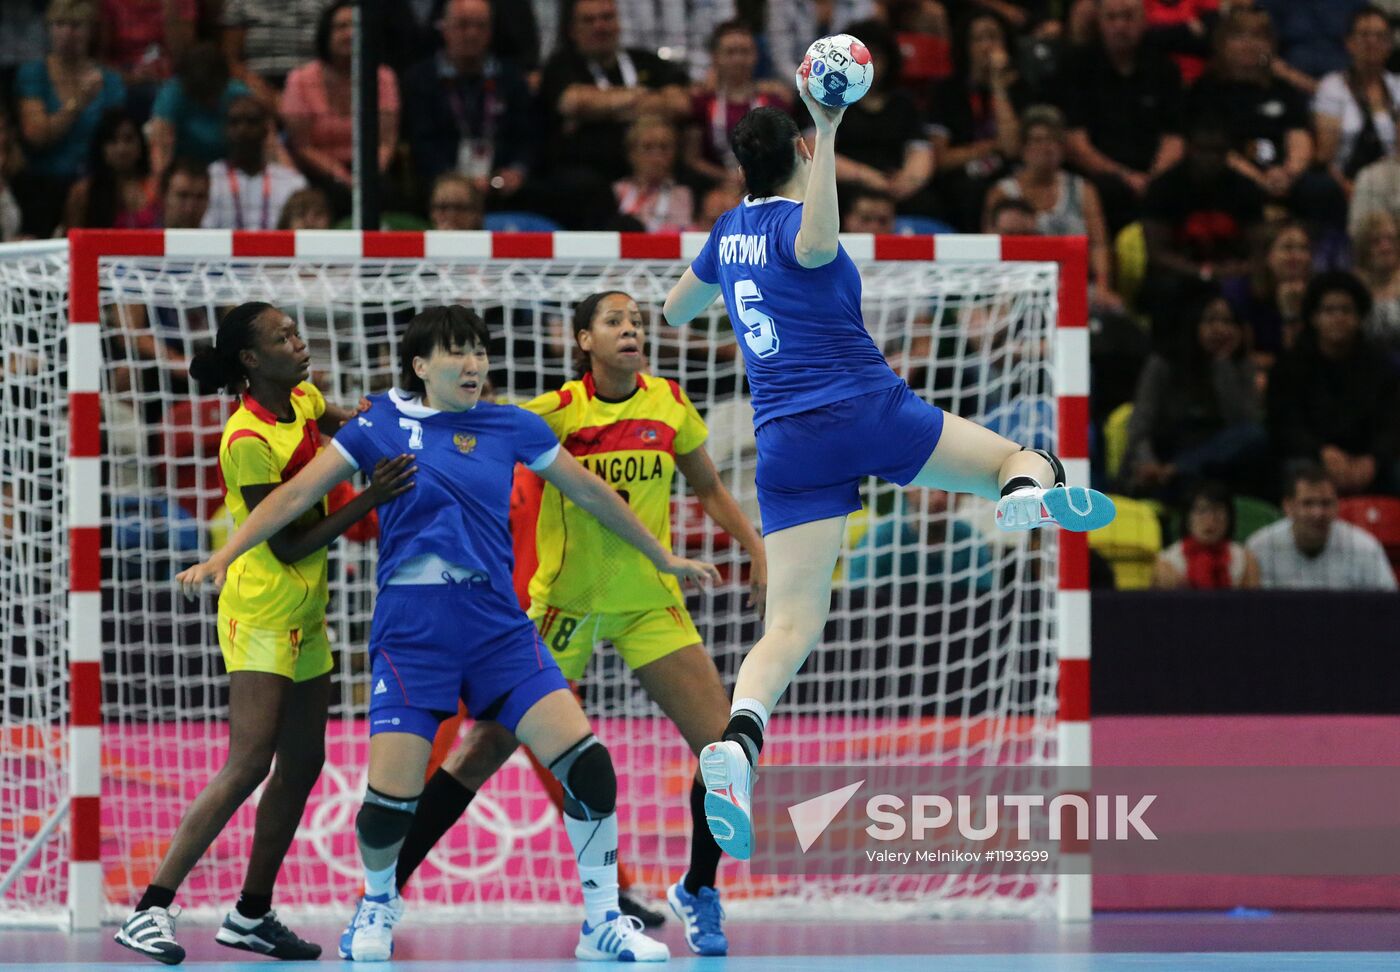 2012 Summer Olympics. Women's Handball. Russia vs. Angola